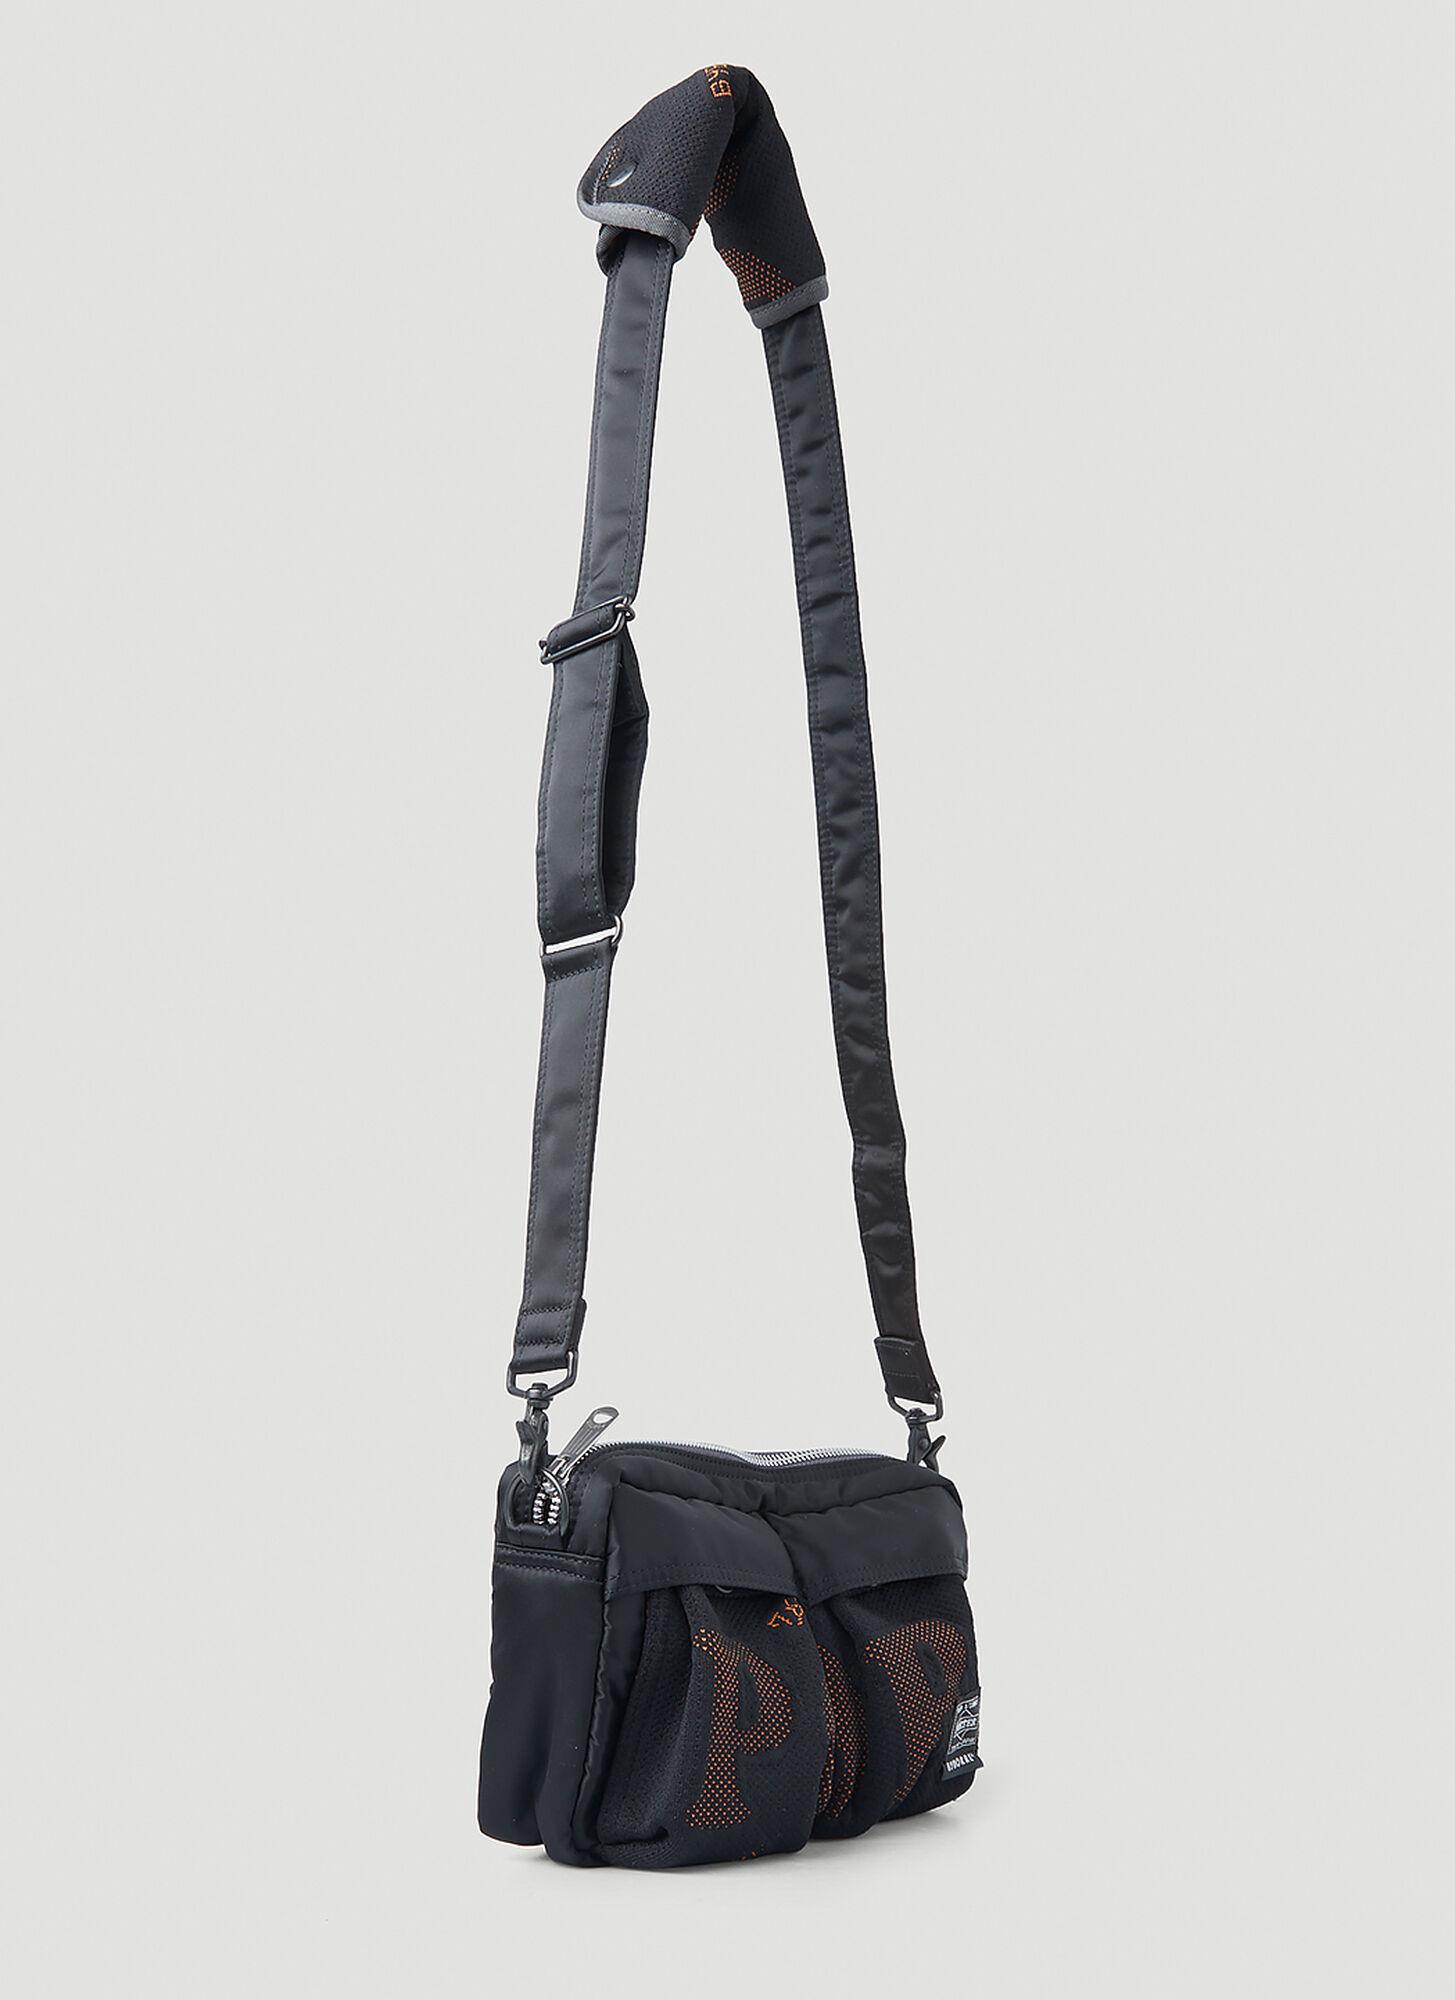 Porter-Yoshida and Co X Byborre Crossbody Bag in Black | Lyst